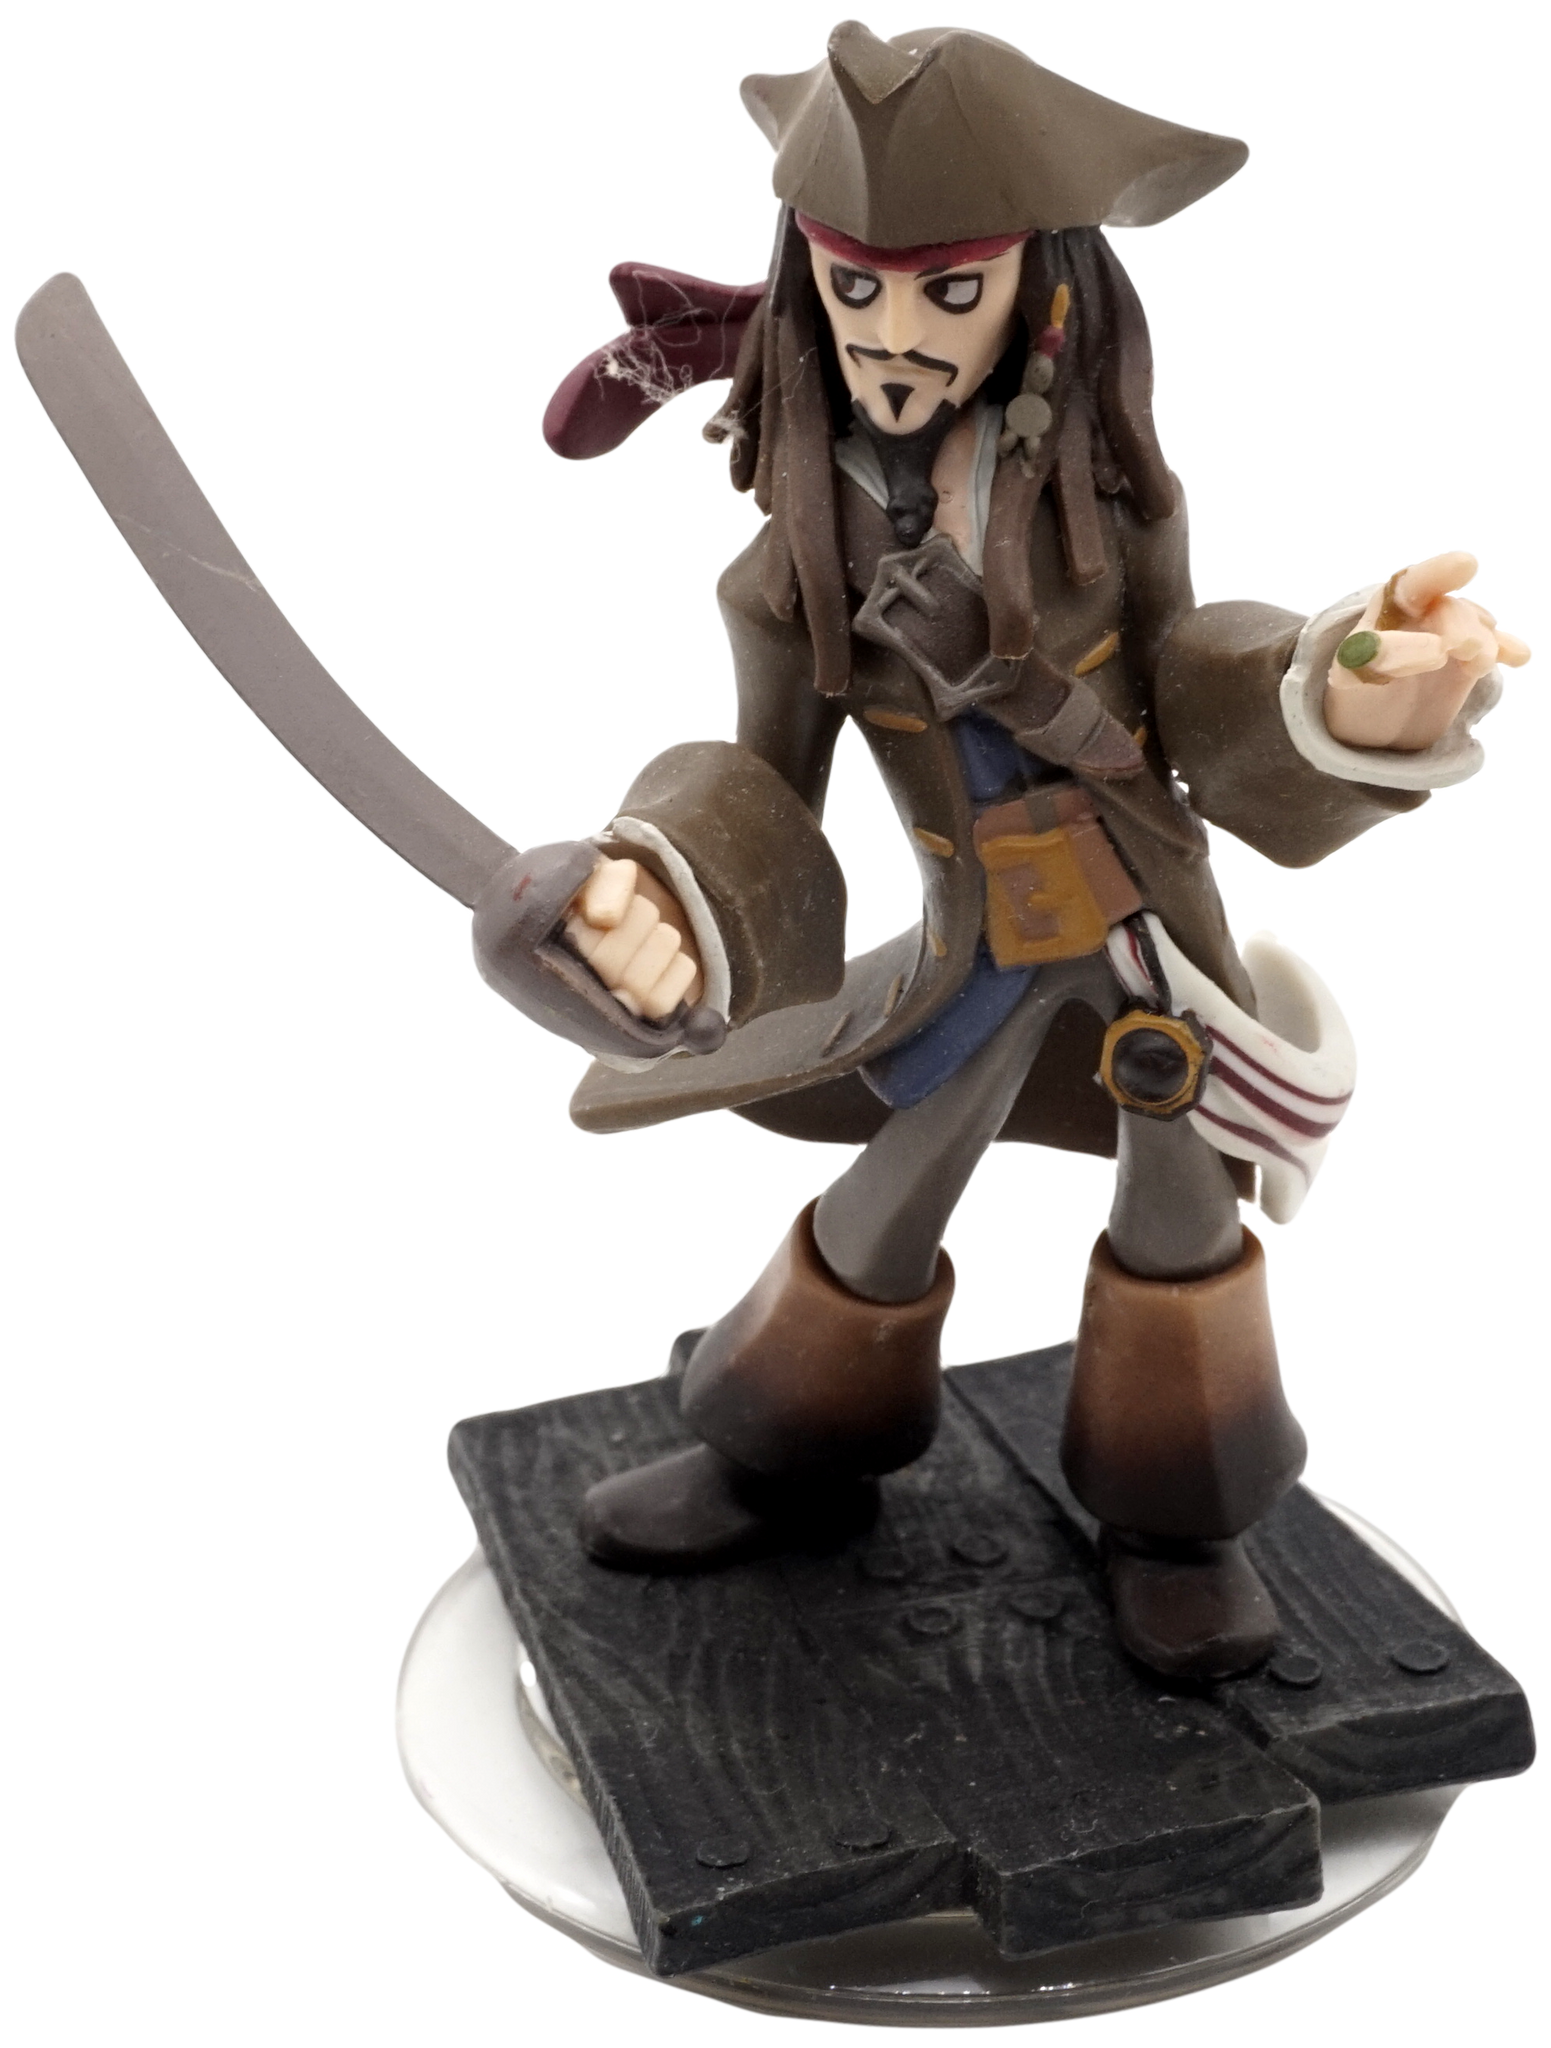 Captain Jack Sparrow - Disney Infinity 2.0